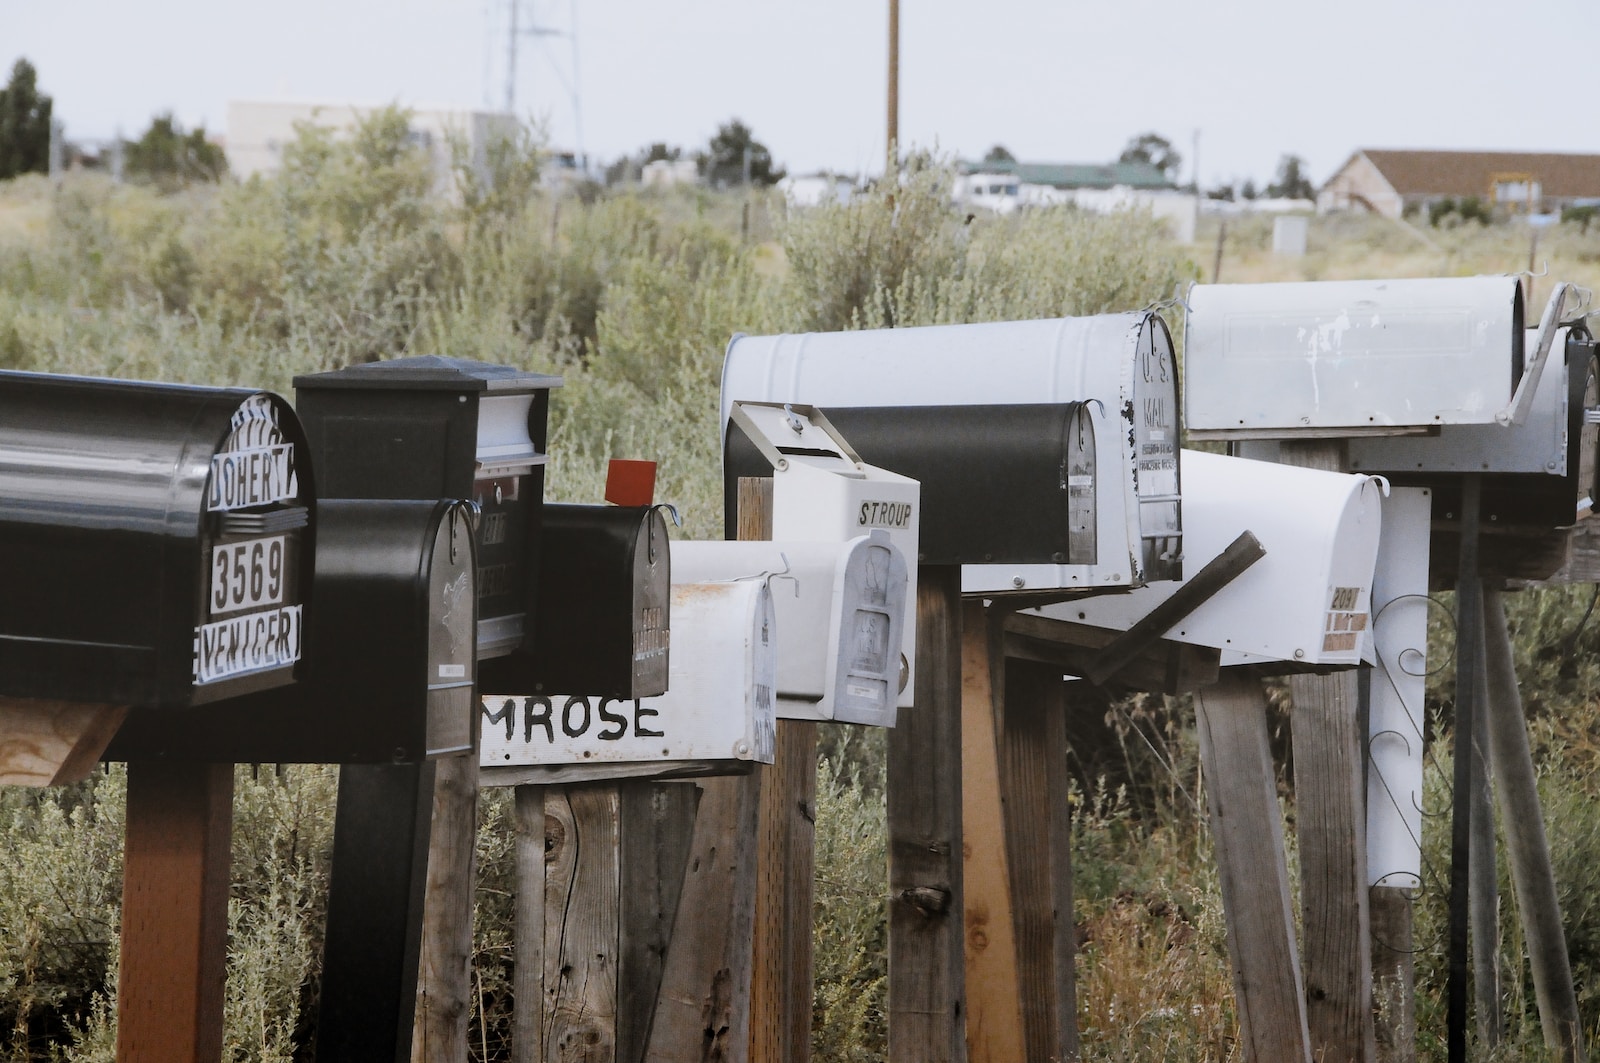 letterbox near grass field